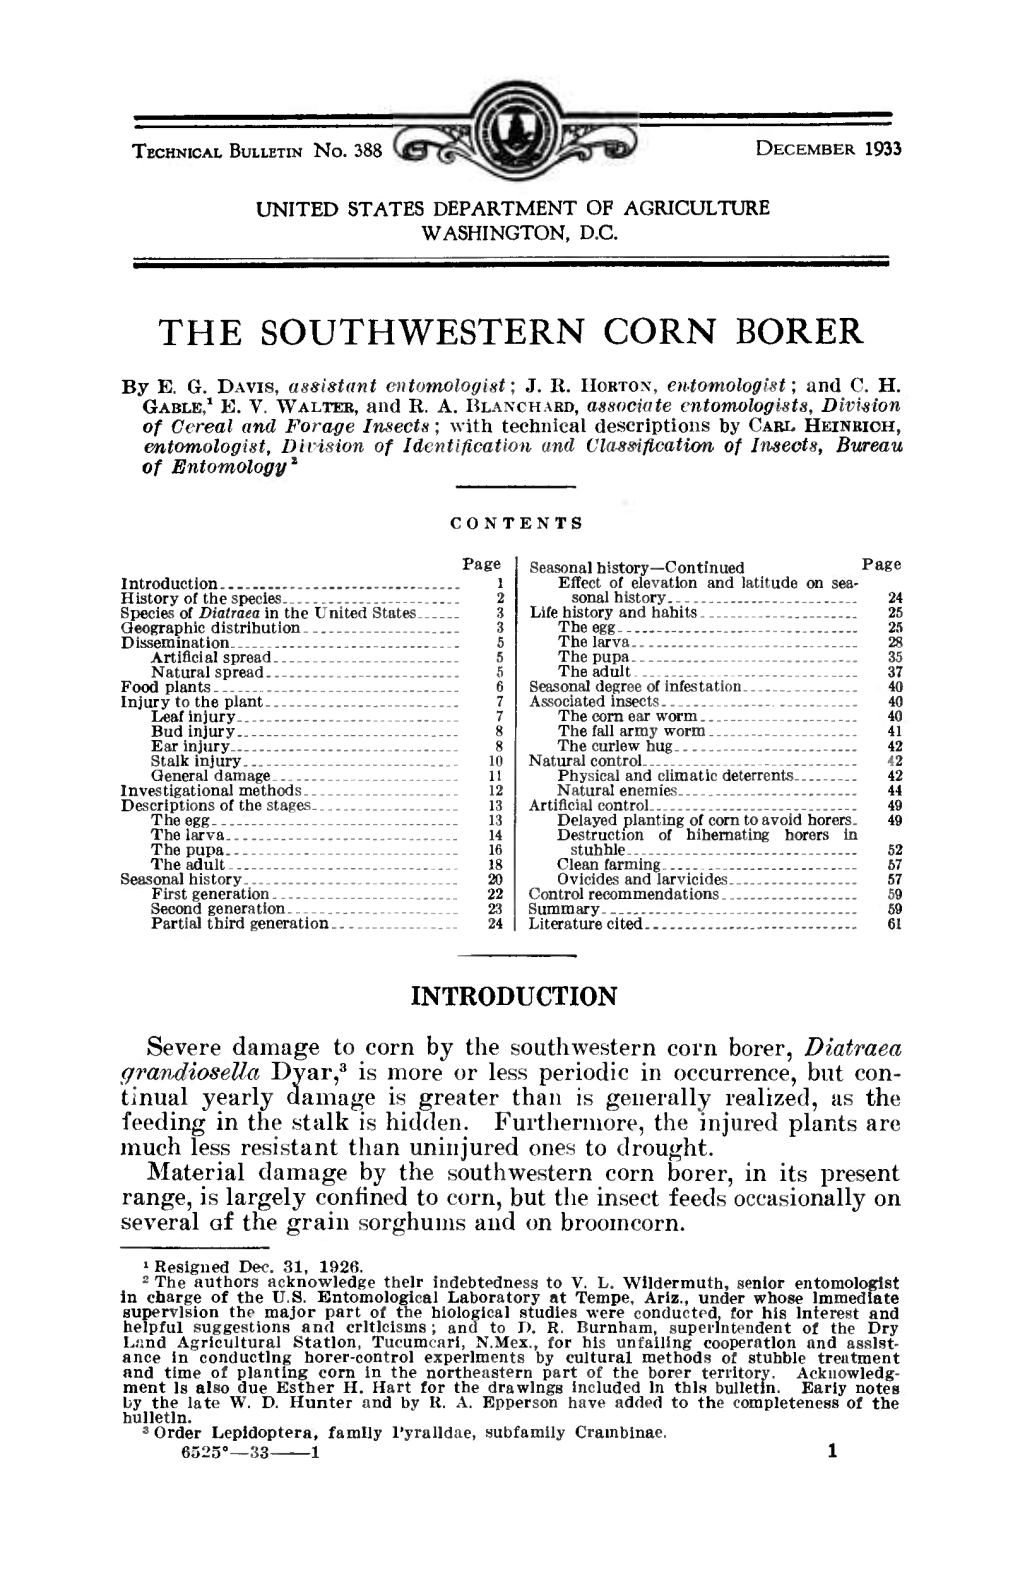 The Southwestern Corn Borer